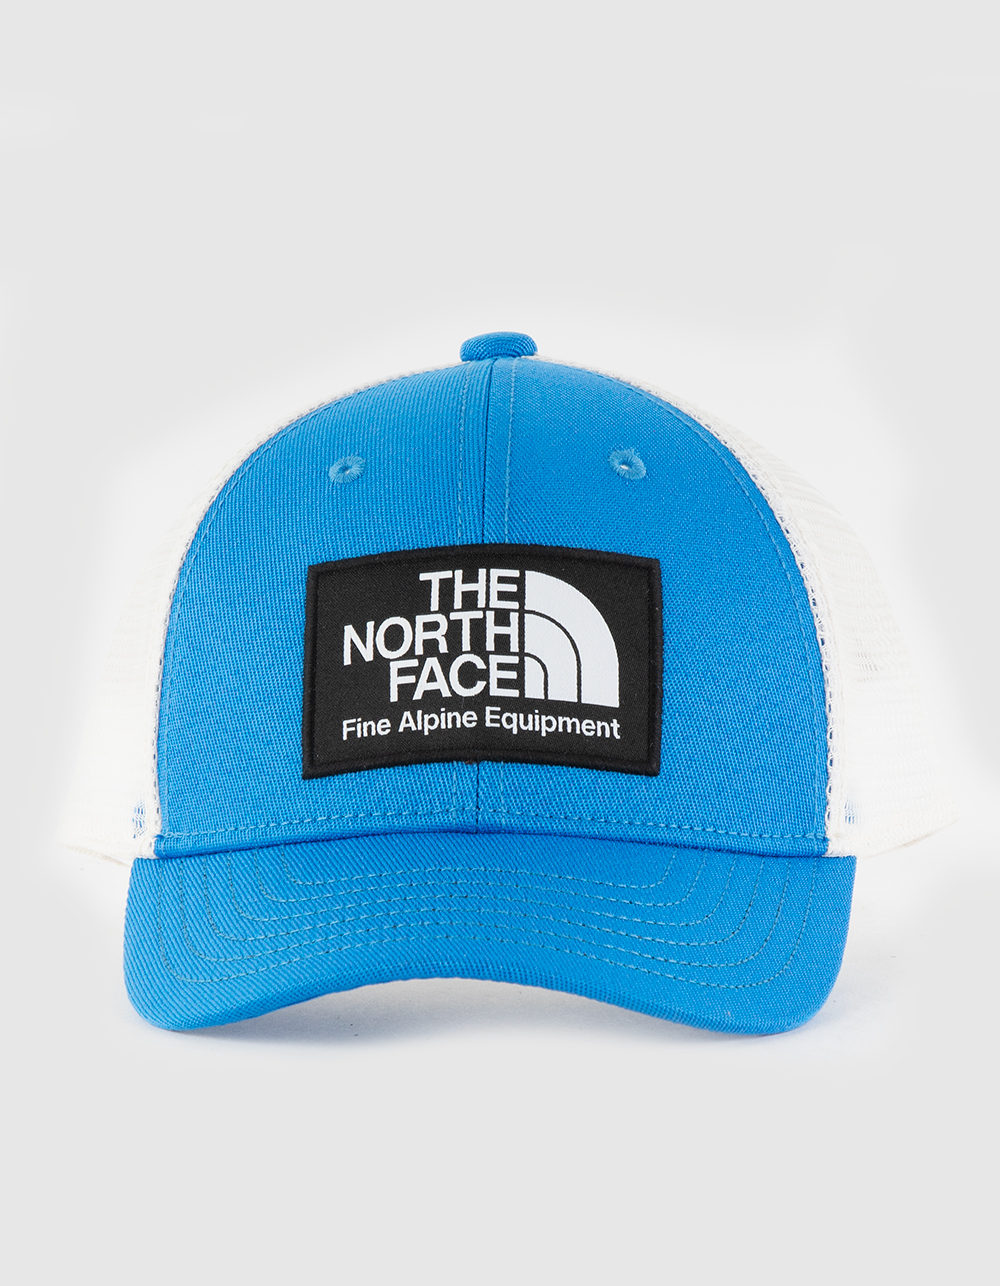 THE NORTH FACE Mudder Boys Trucker Hat